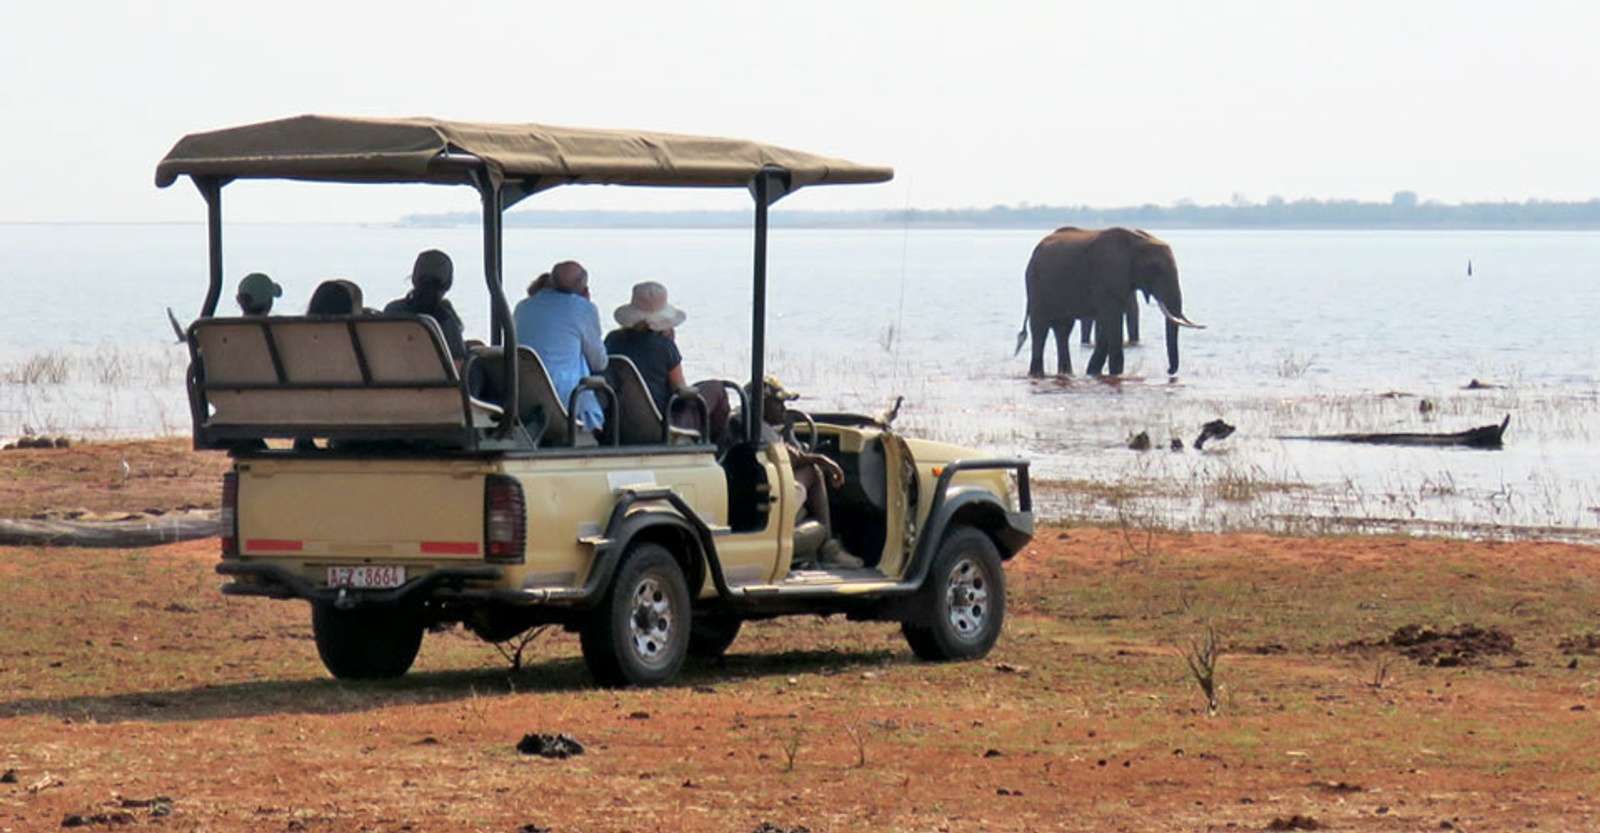 Nat Hab guests and elephant, Matusadona National Park, Zimbabwe. 